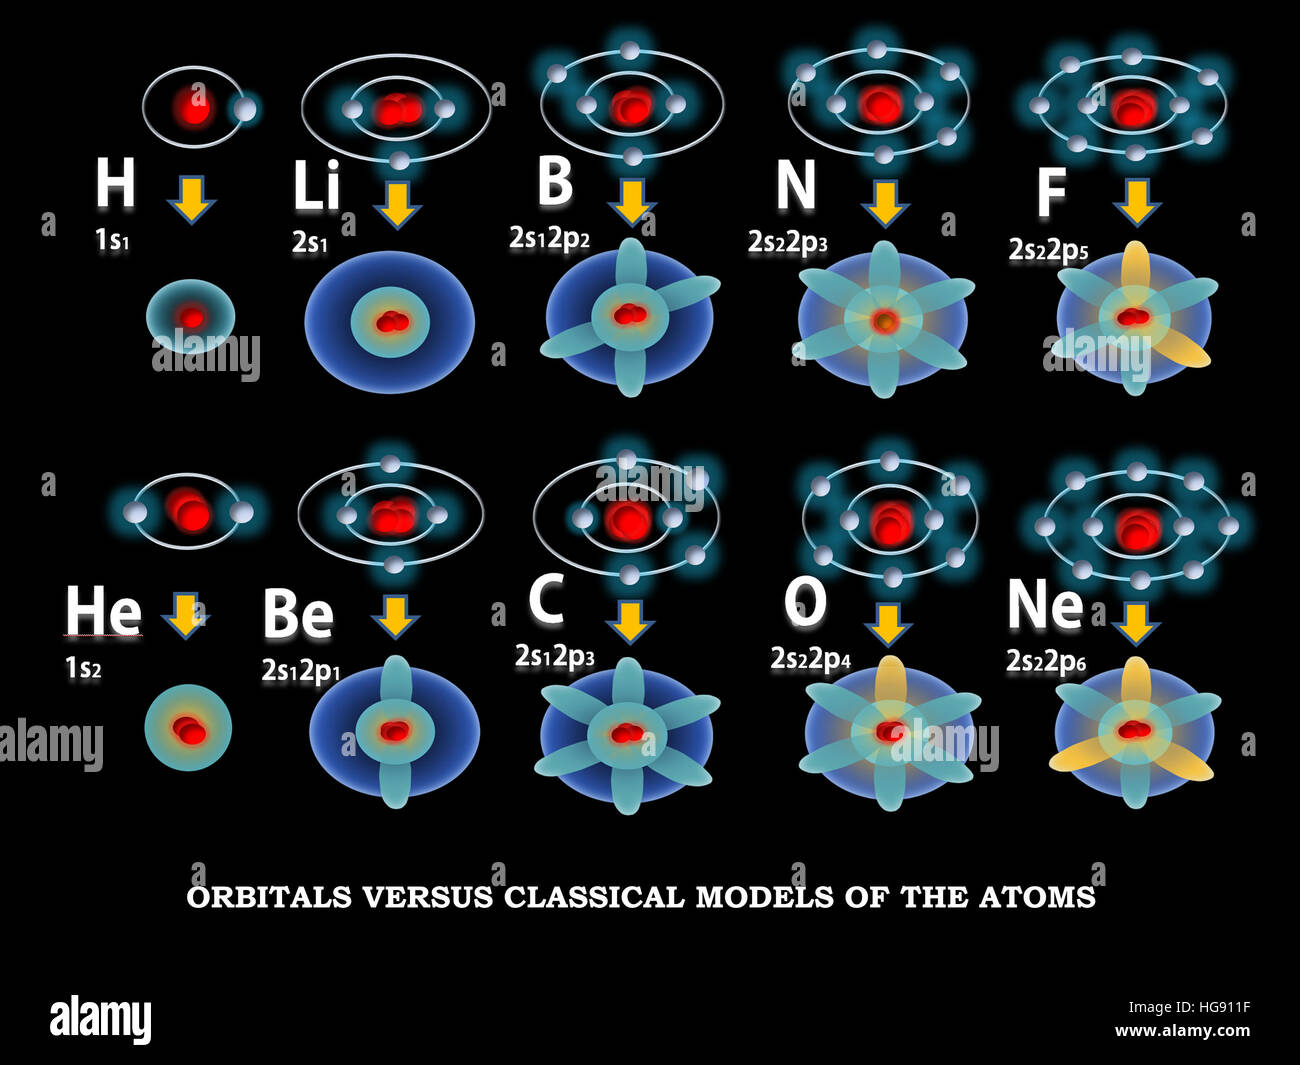 Orbital models of atoms. Stock Photo